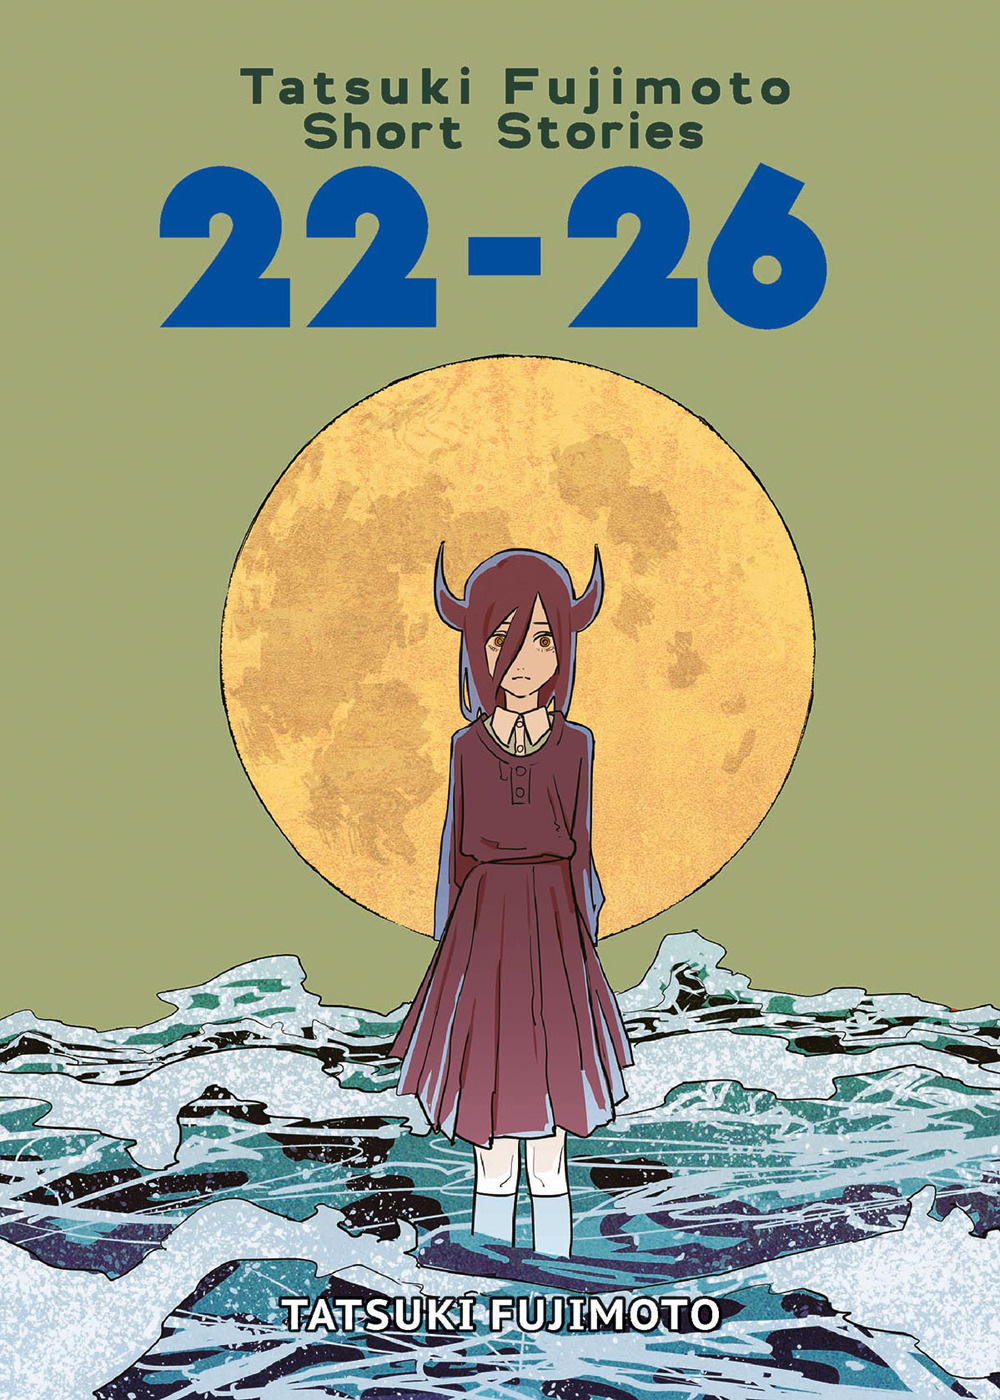 Tatsuki Fujimoto short stories. Ediz. deluxe. Vol. 22-26